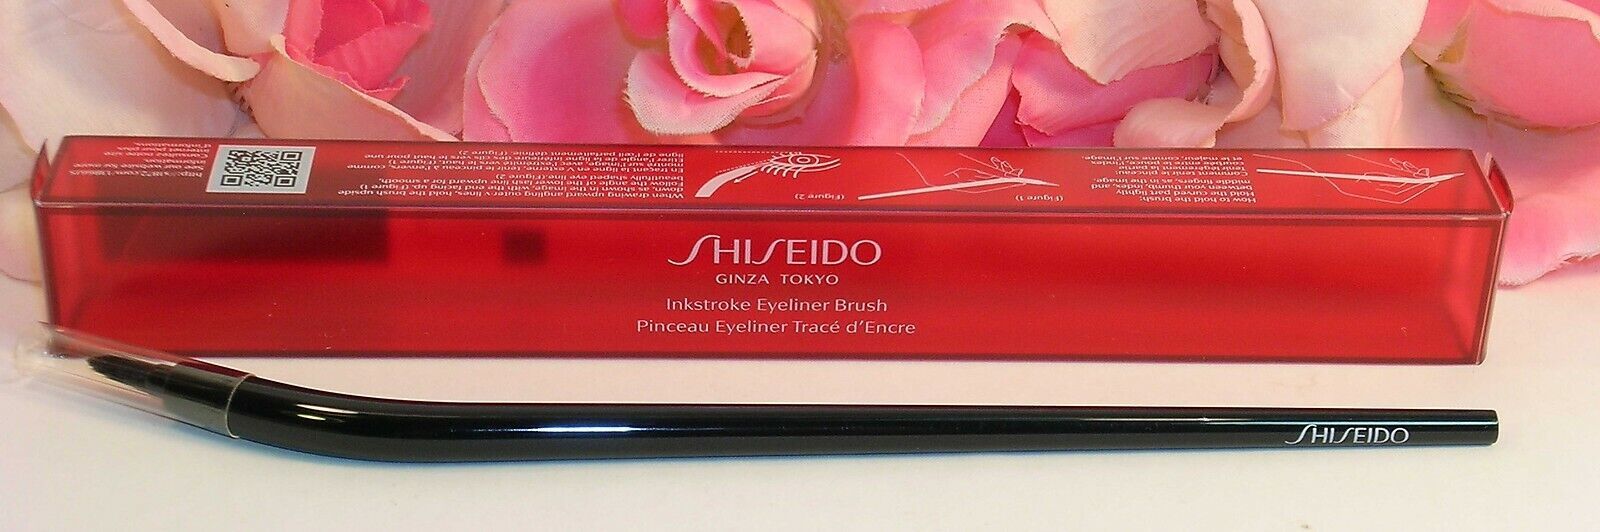 Primary image for New Shiseido Inkstroke Angeled Eyeliner Brush Ginza Tokyo Full Size 6 1/2" Long